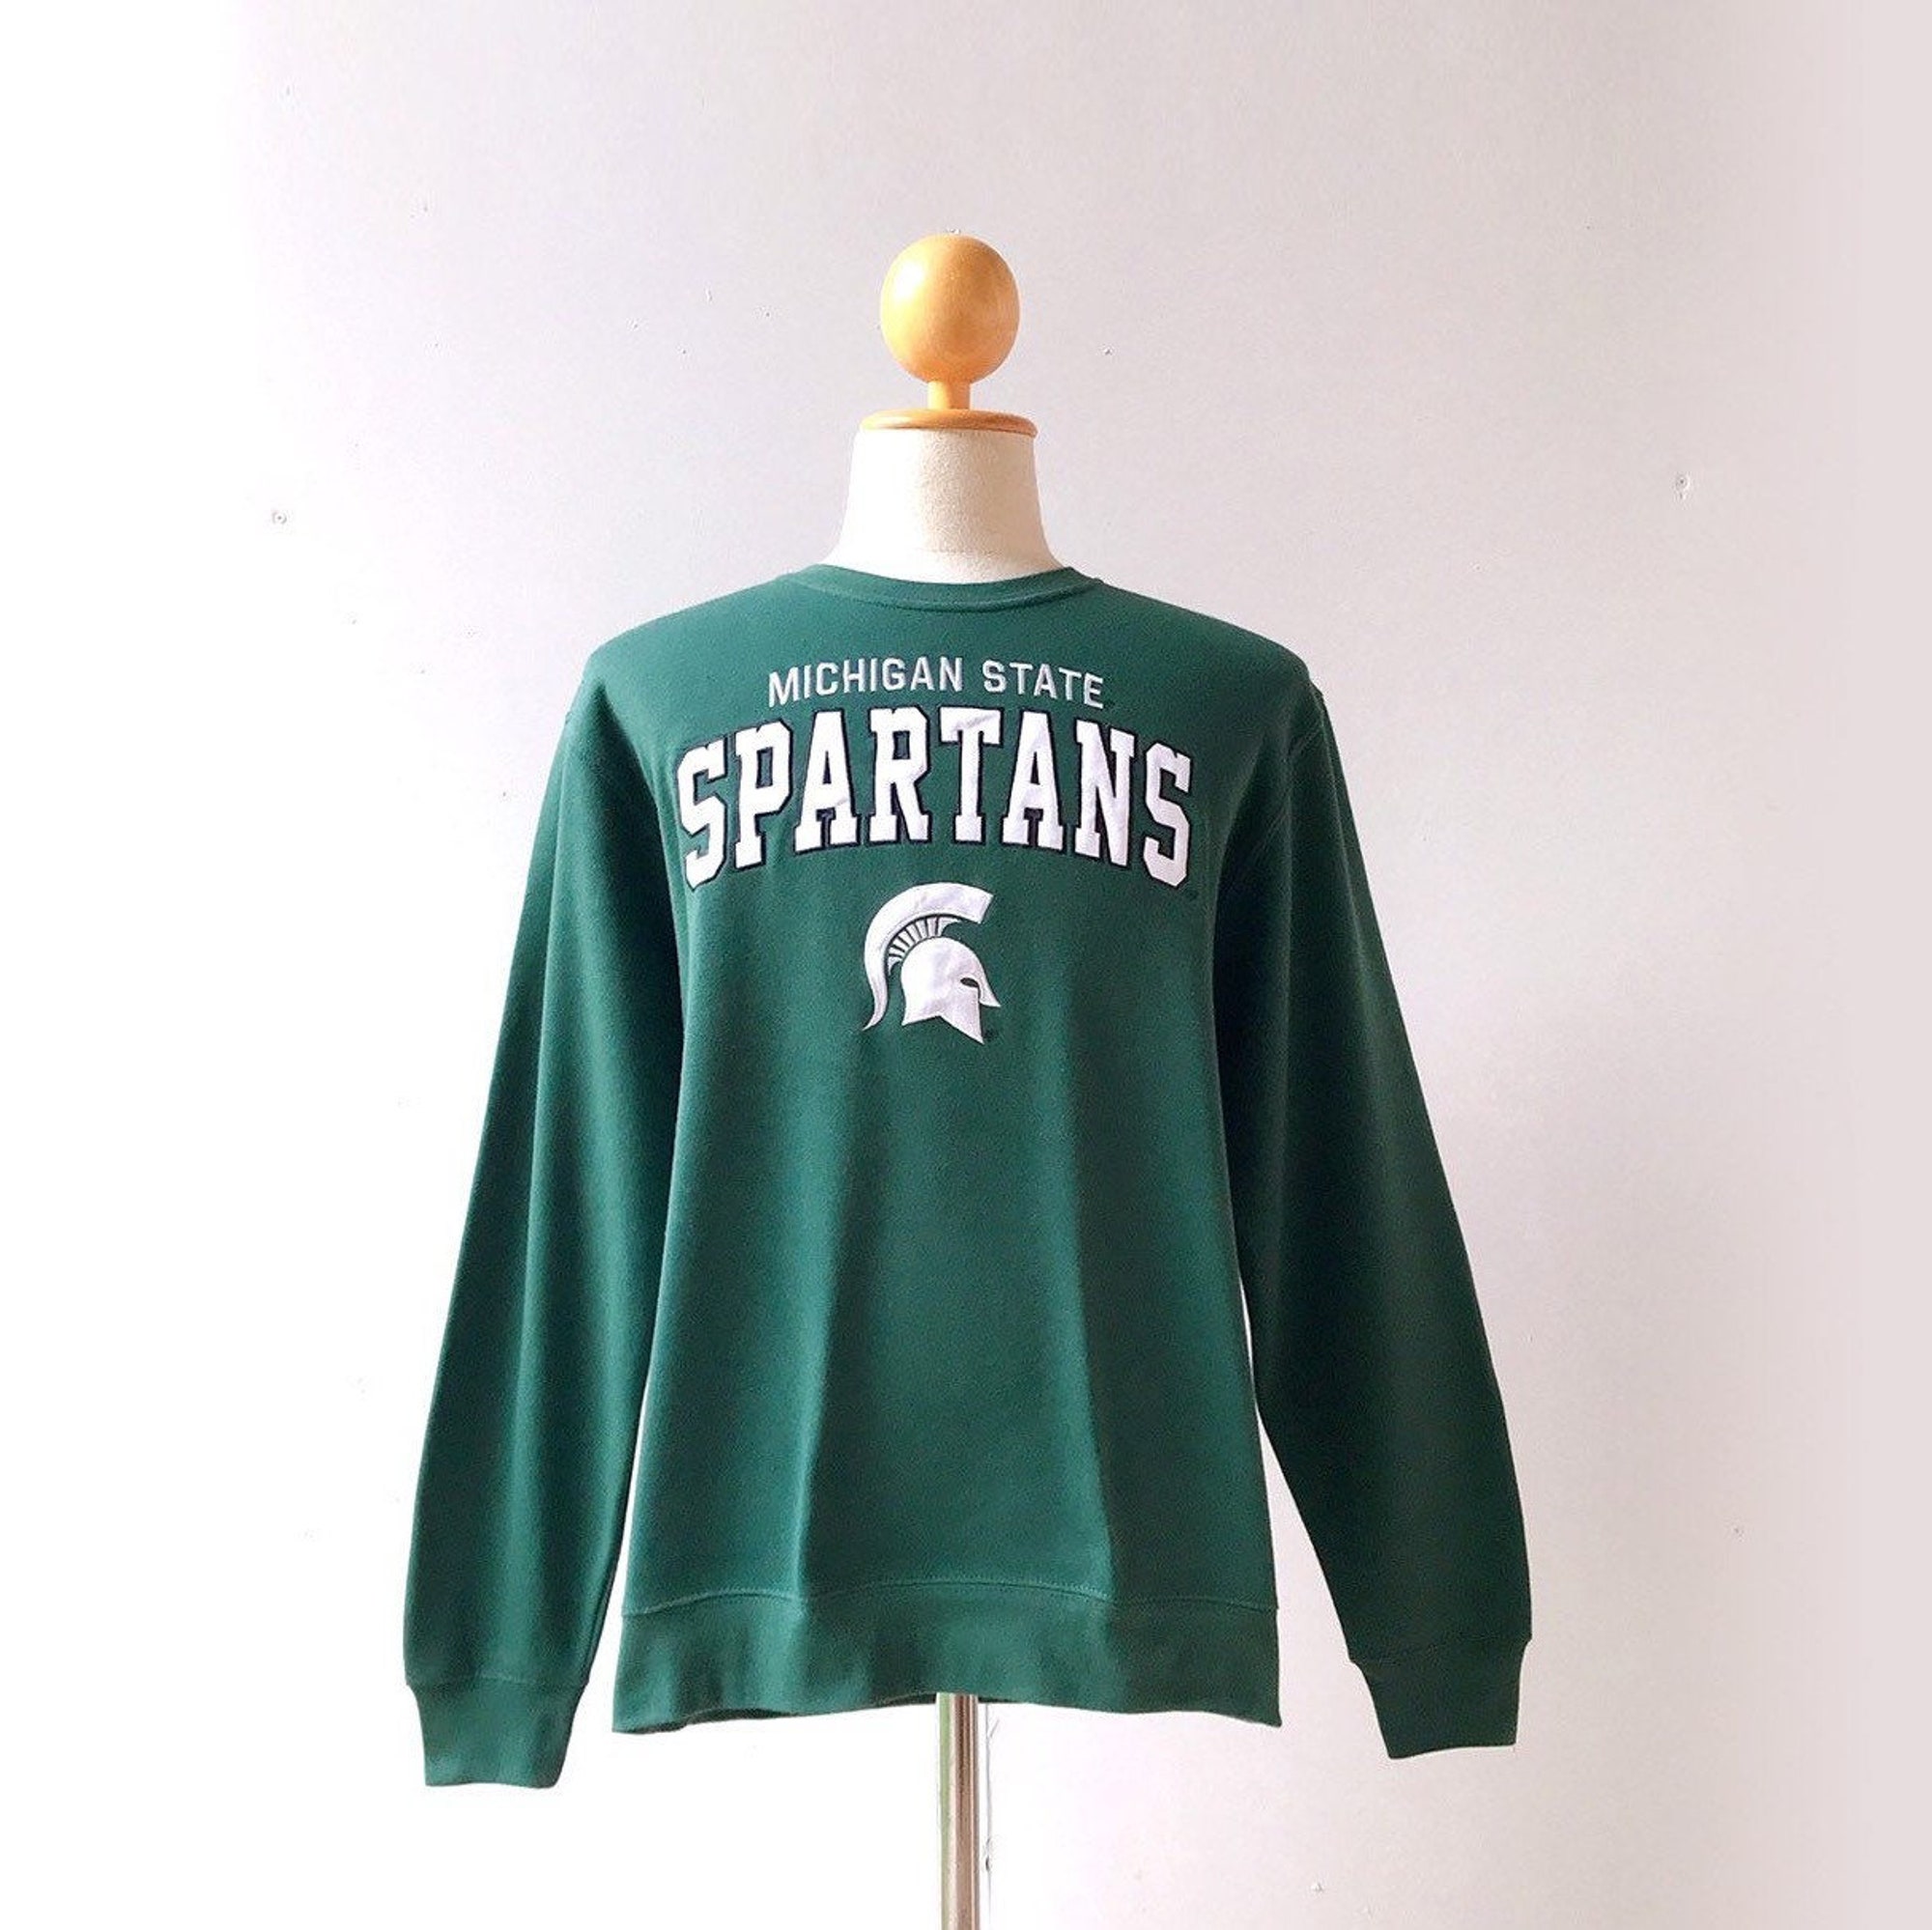 Discover Michigan State University Spartan Sweatshirt